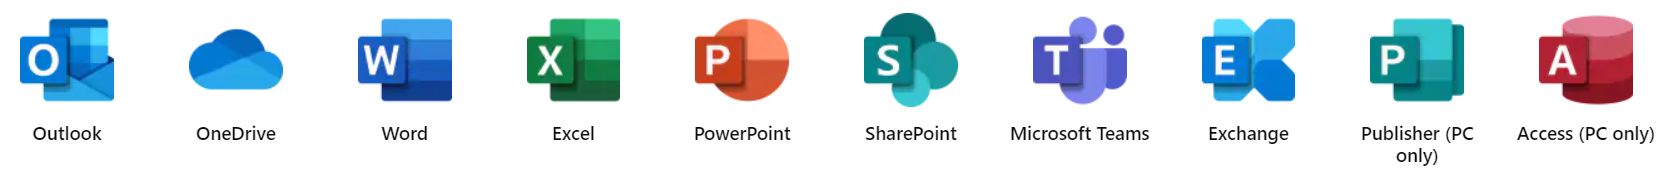 Office 365 logos